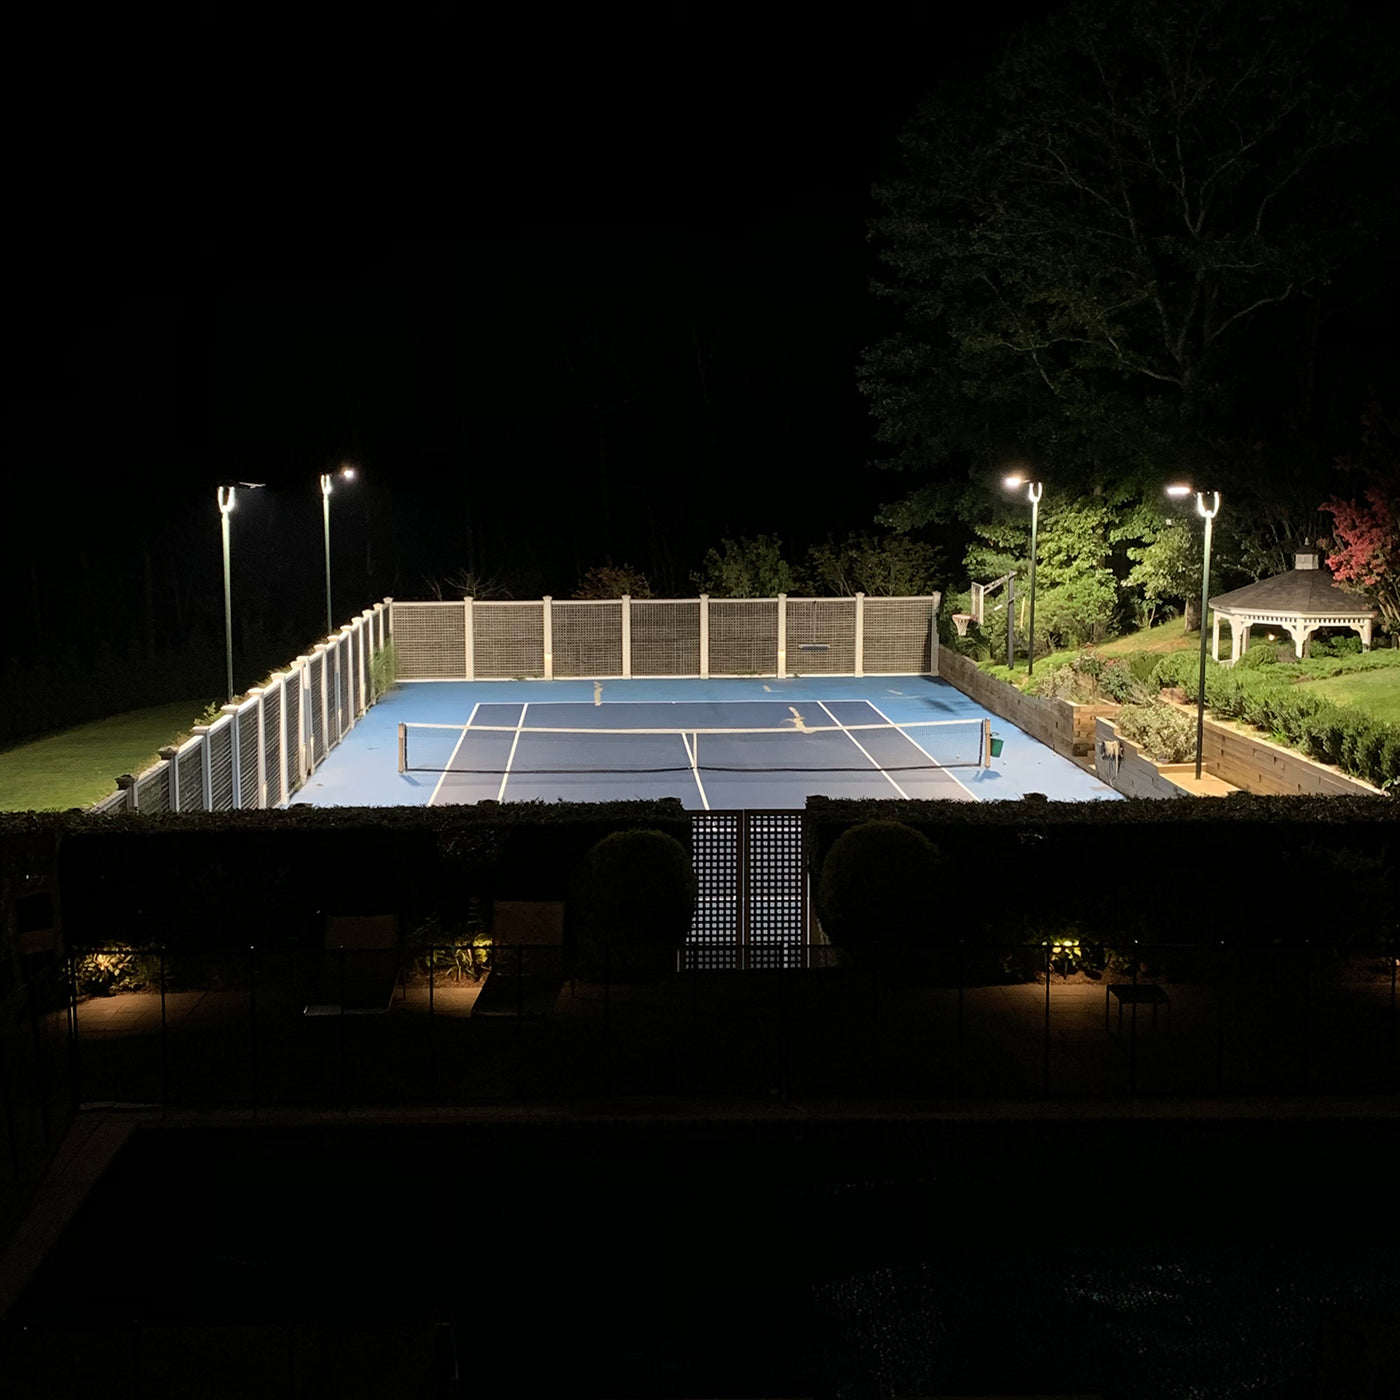 LED Light Fixtures + Hunter Green Light Poles for Backyard Tennis Court Lighting Project